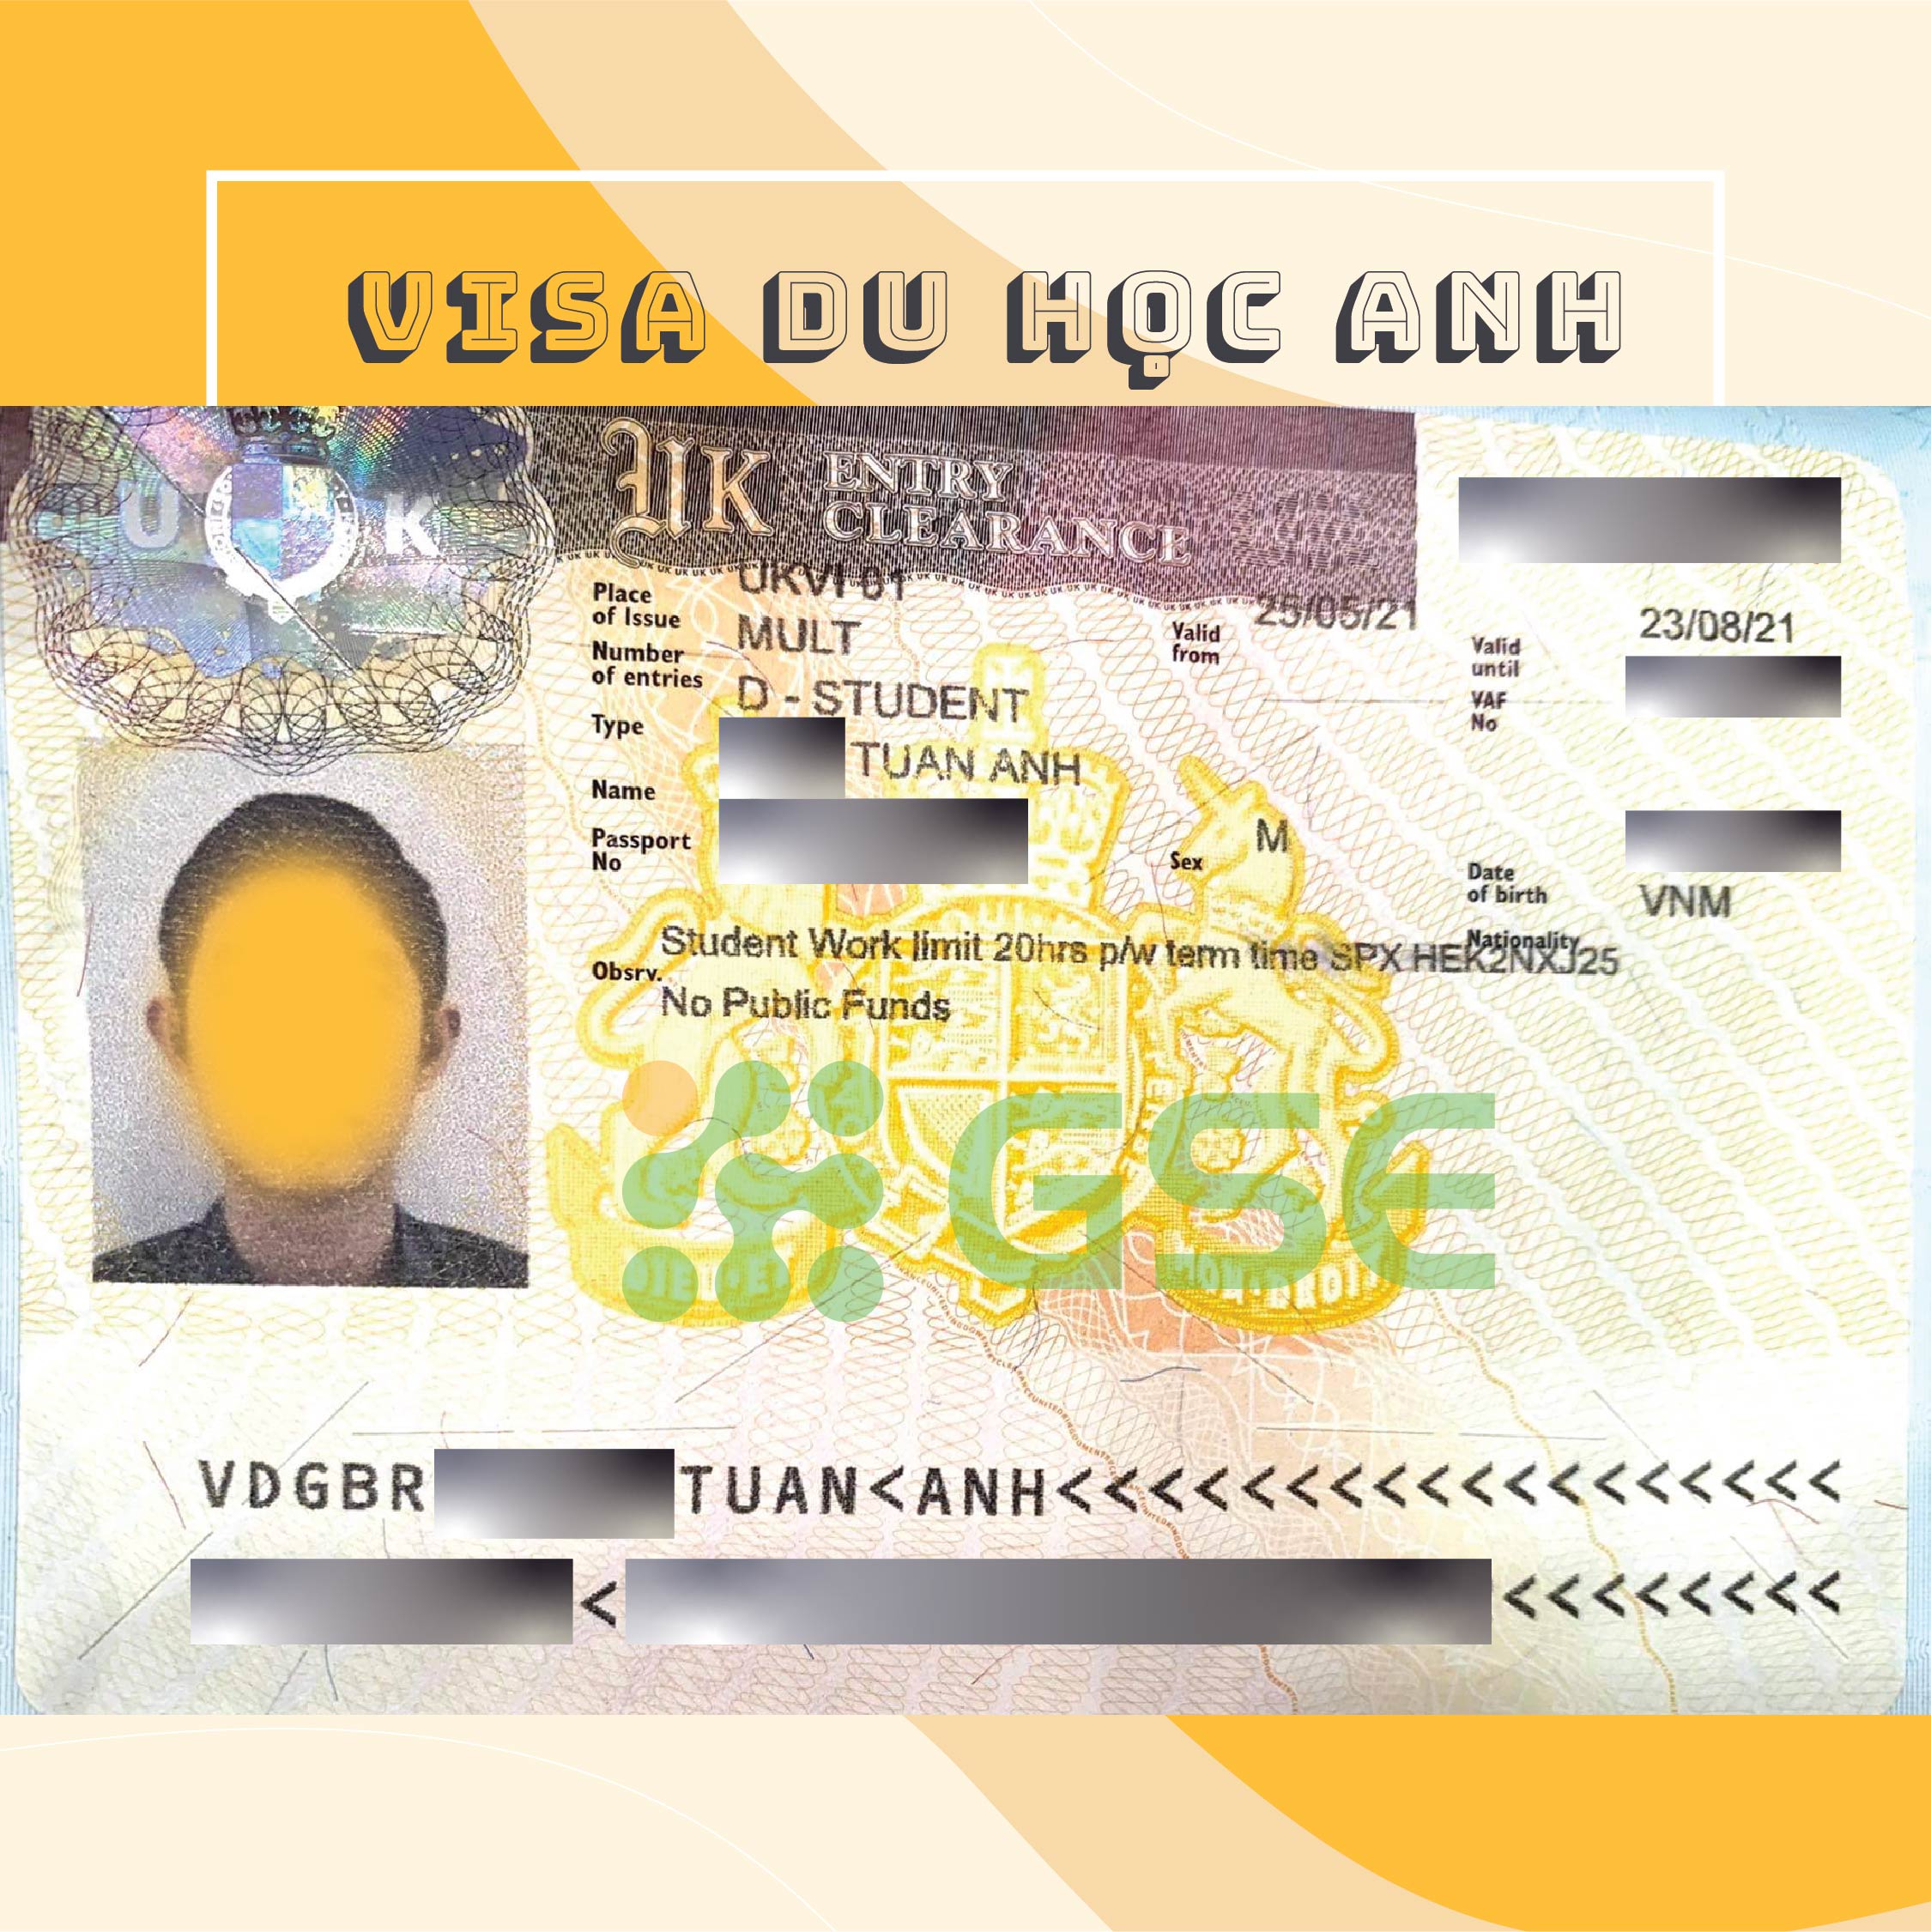 Visa uk tuan anh 03 - Visa du học Anh - Tuấn Anh